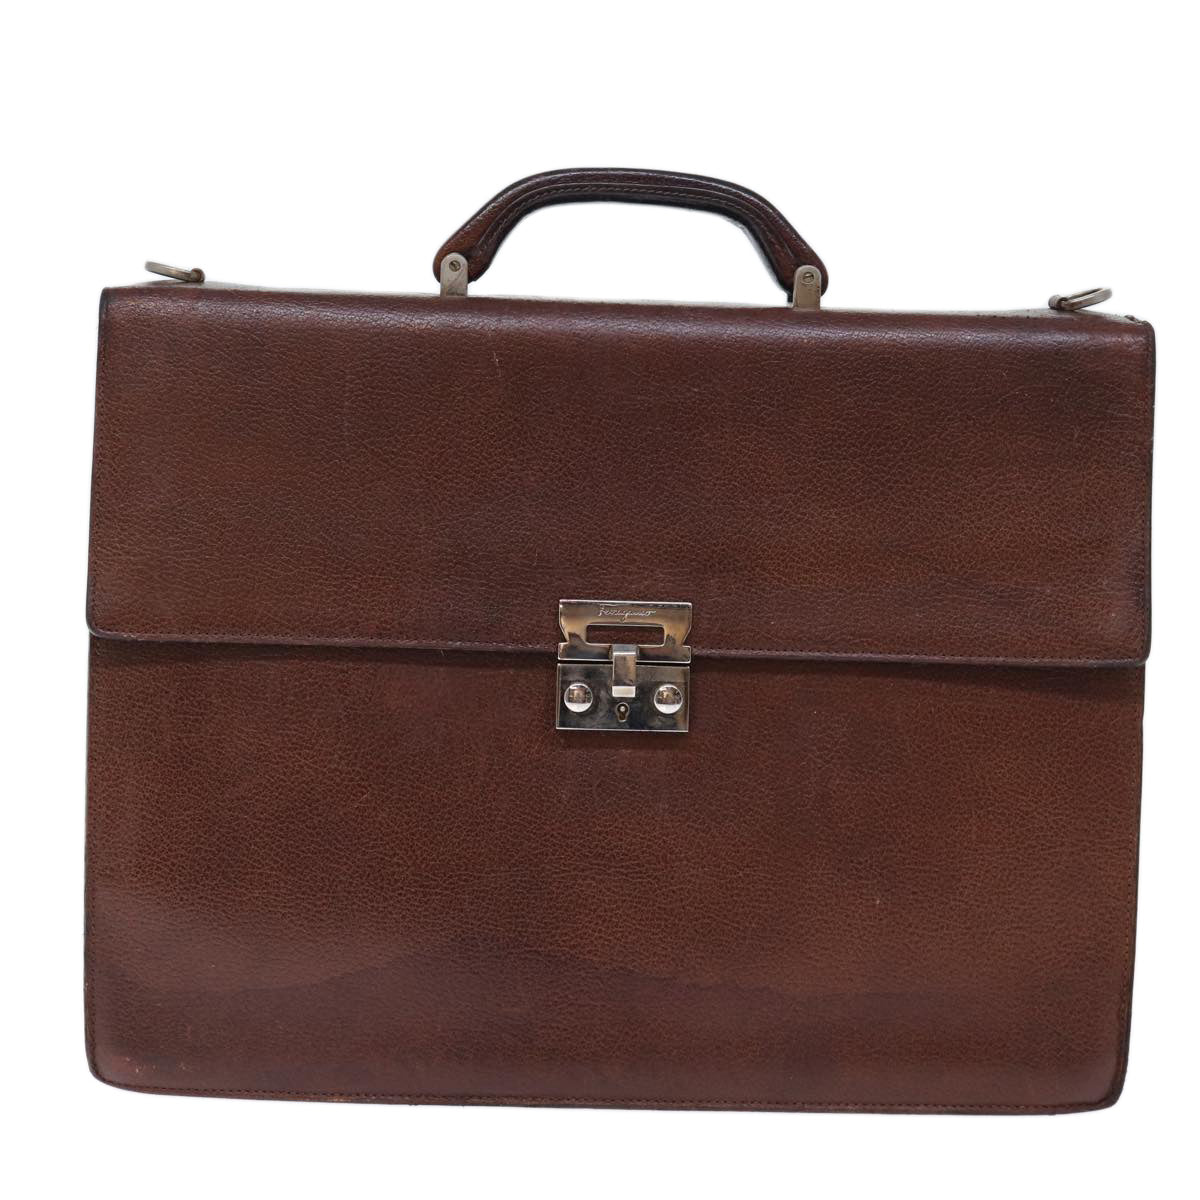 Salvatore Ferragamo Hand Bag Leather 2way Brown 001 2865 1657 Auth bs13795 - 0